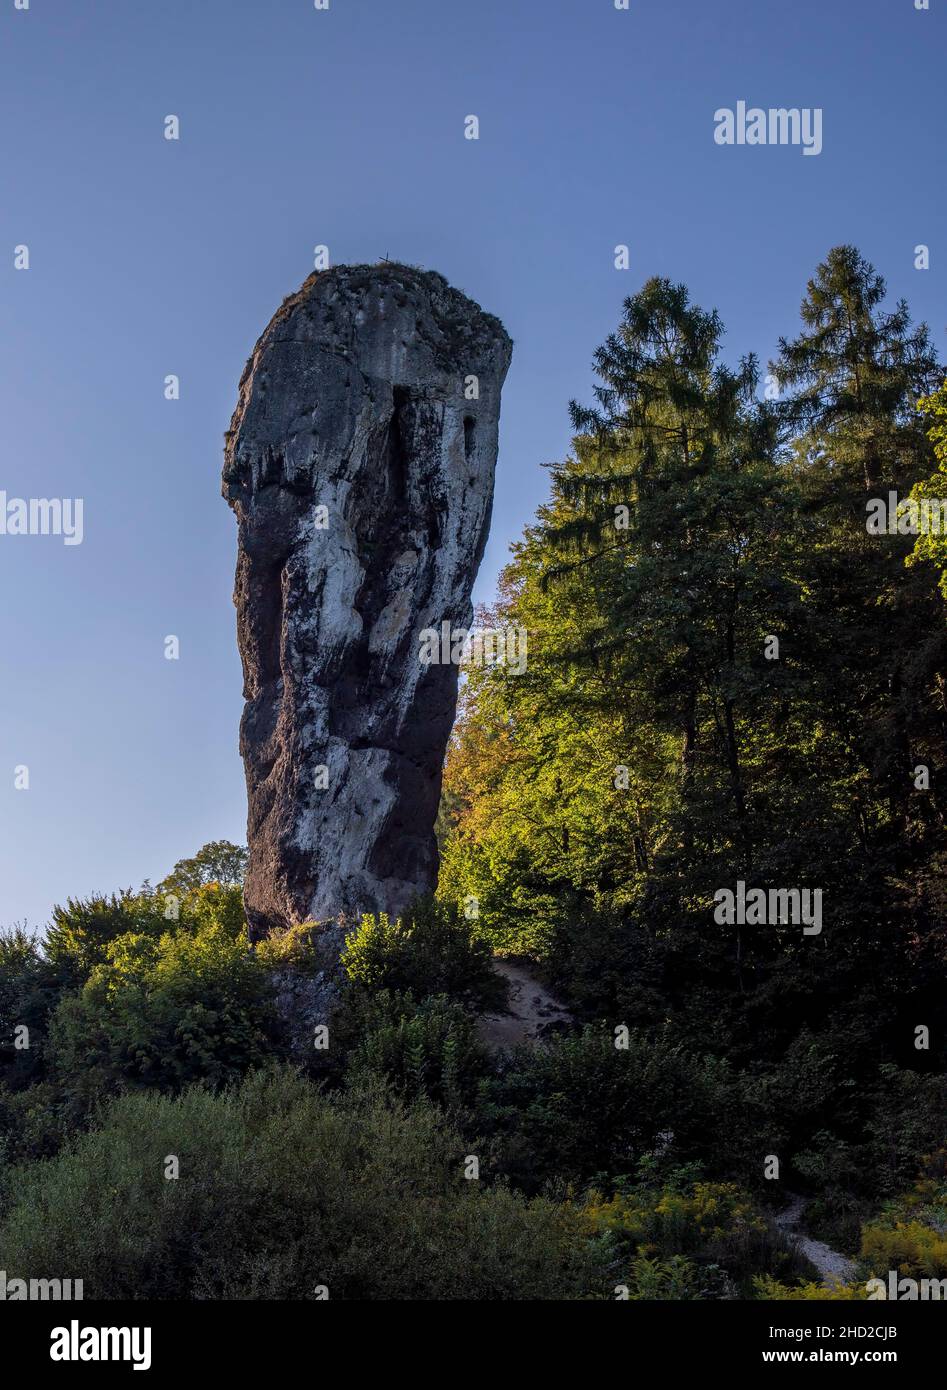 Maczuga Herkulesa - limestone stack situated near Pieskowa Skala in Poland Stock Photo